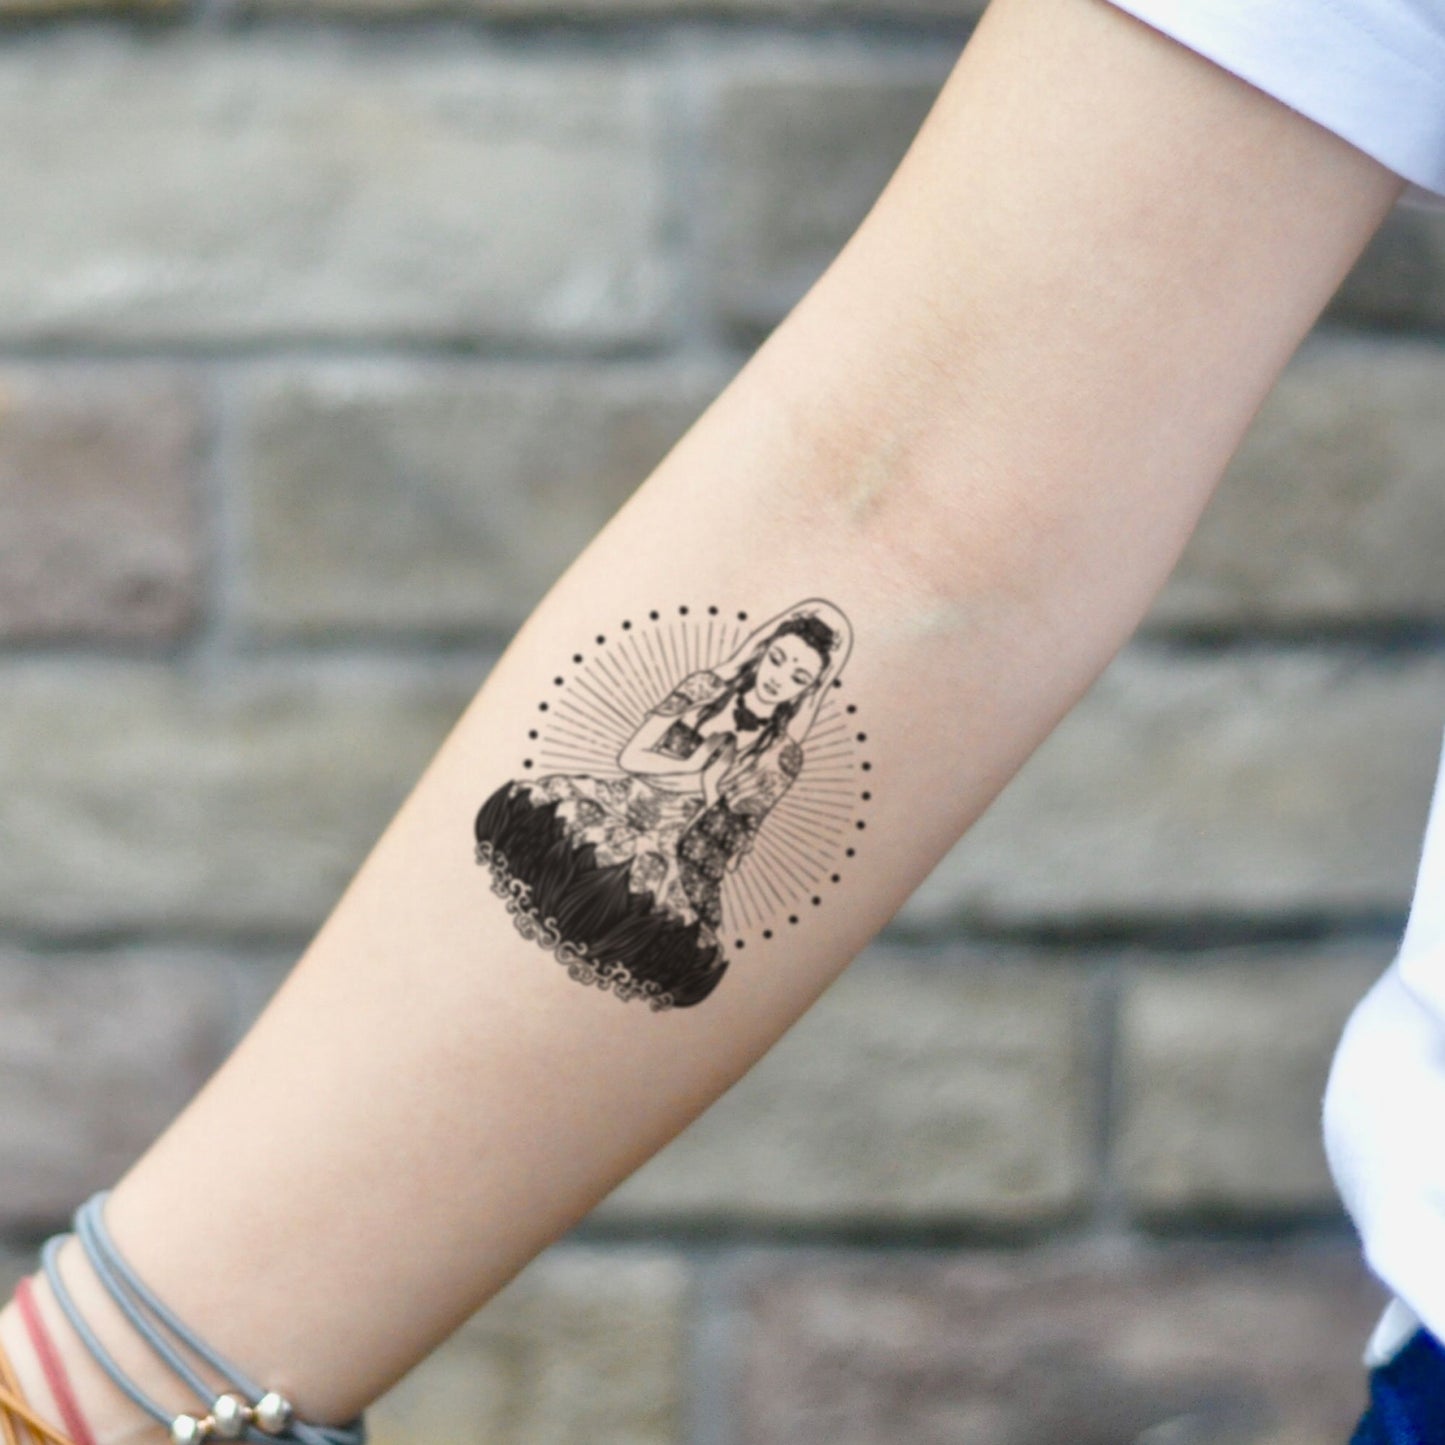 fake medium quan yin goddess illustrative temporary tattoo sticker design idea on inner arm